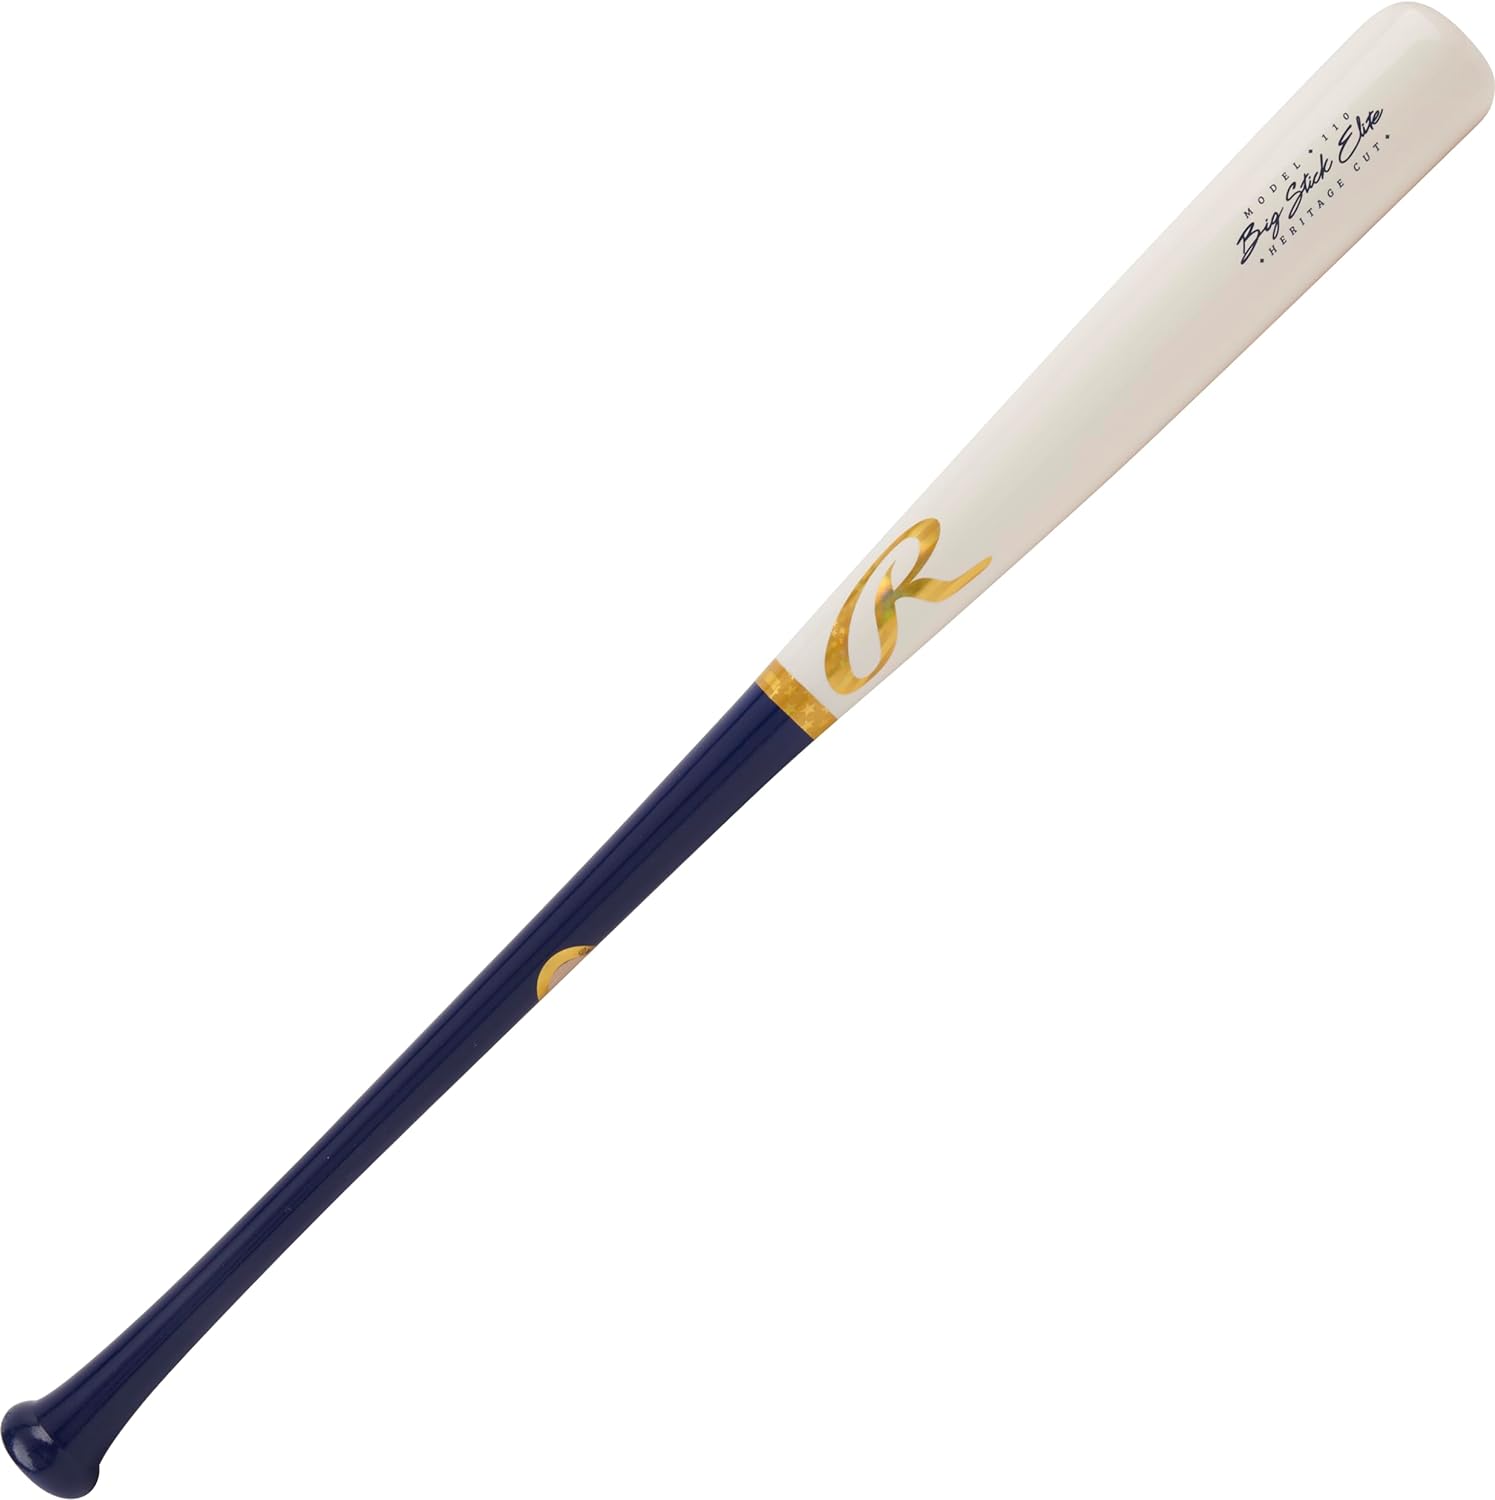 New Rawlings Big Stick Elite - Birch Wood Baseball Bat Natural/Navy